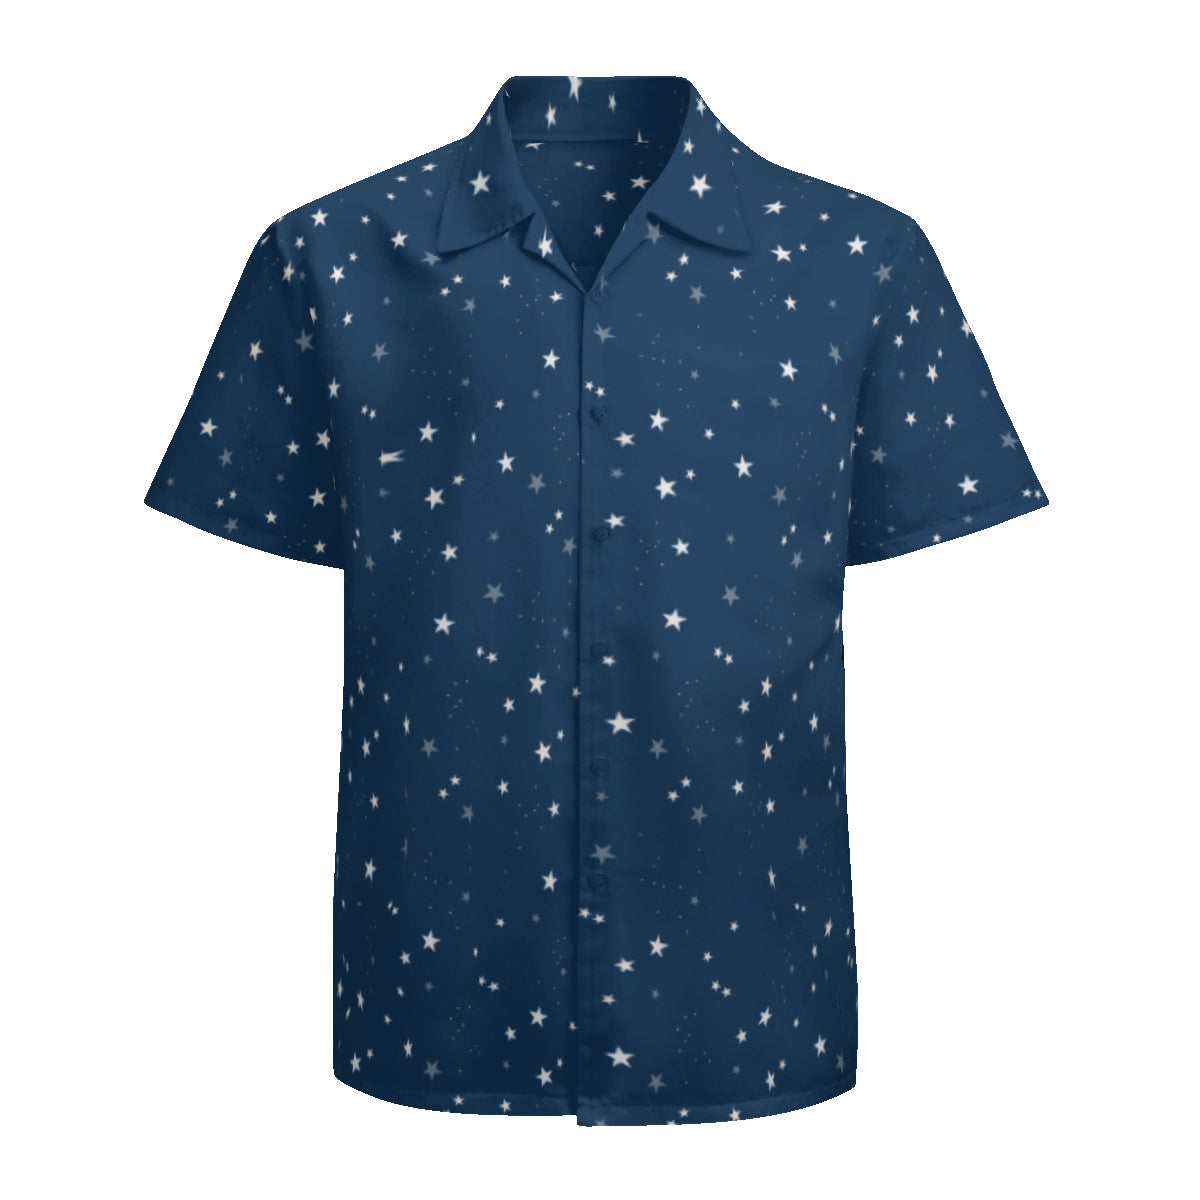 Star Shirt Men, Navy Blue Shirt Men, Short Sleeve Shirt Men, Star Print Shirt, Star Top Men, Gifts for Him, Astronomy Shirt Men